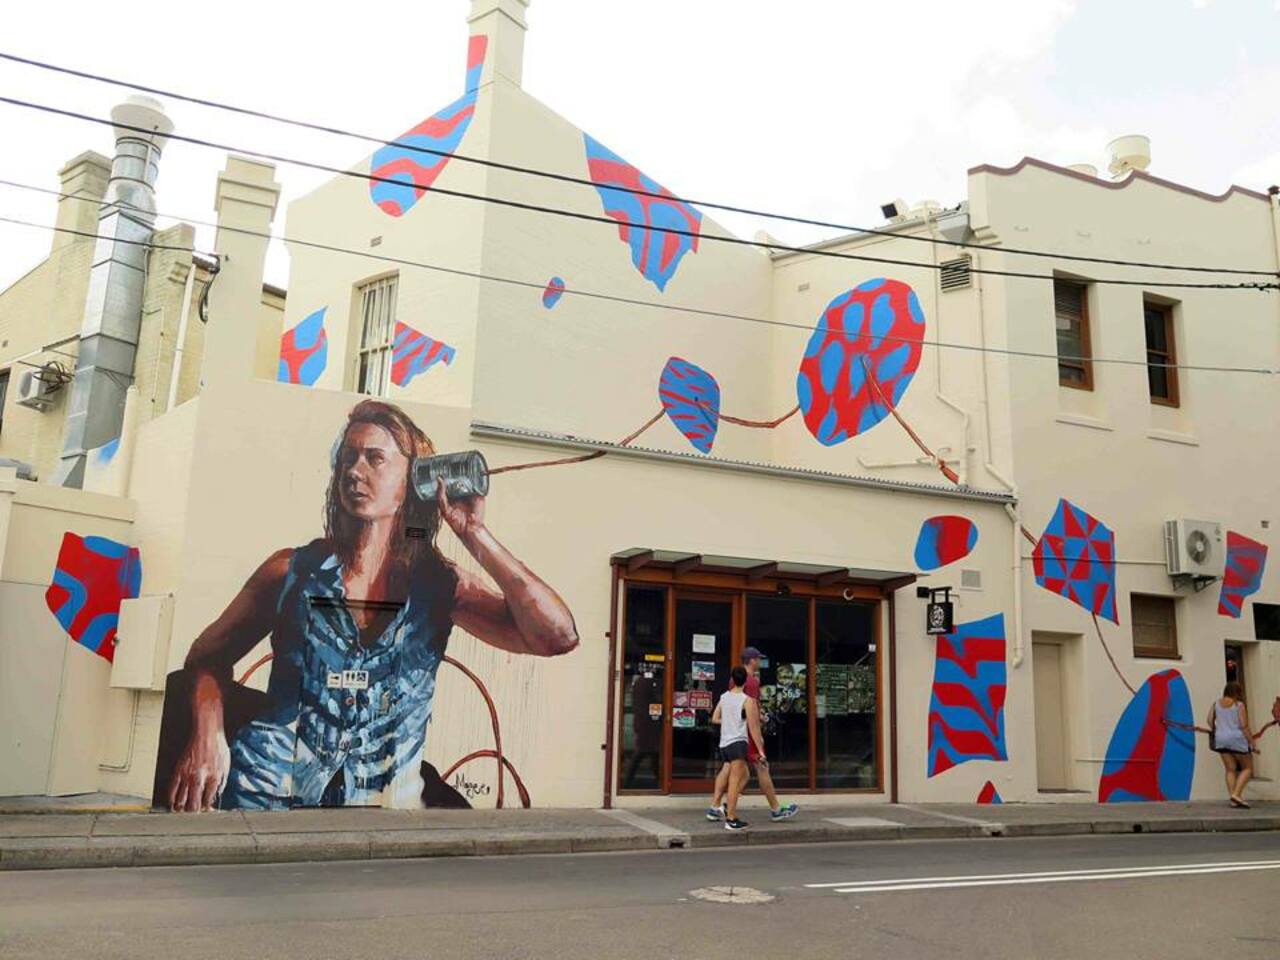 New #Mural Fintan Magee with Numskull, Newtown, Sydney
#art

#streetart
#graffiti http://t.co/MCAQl4VIjS